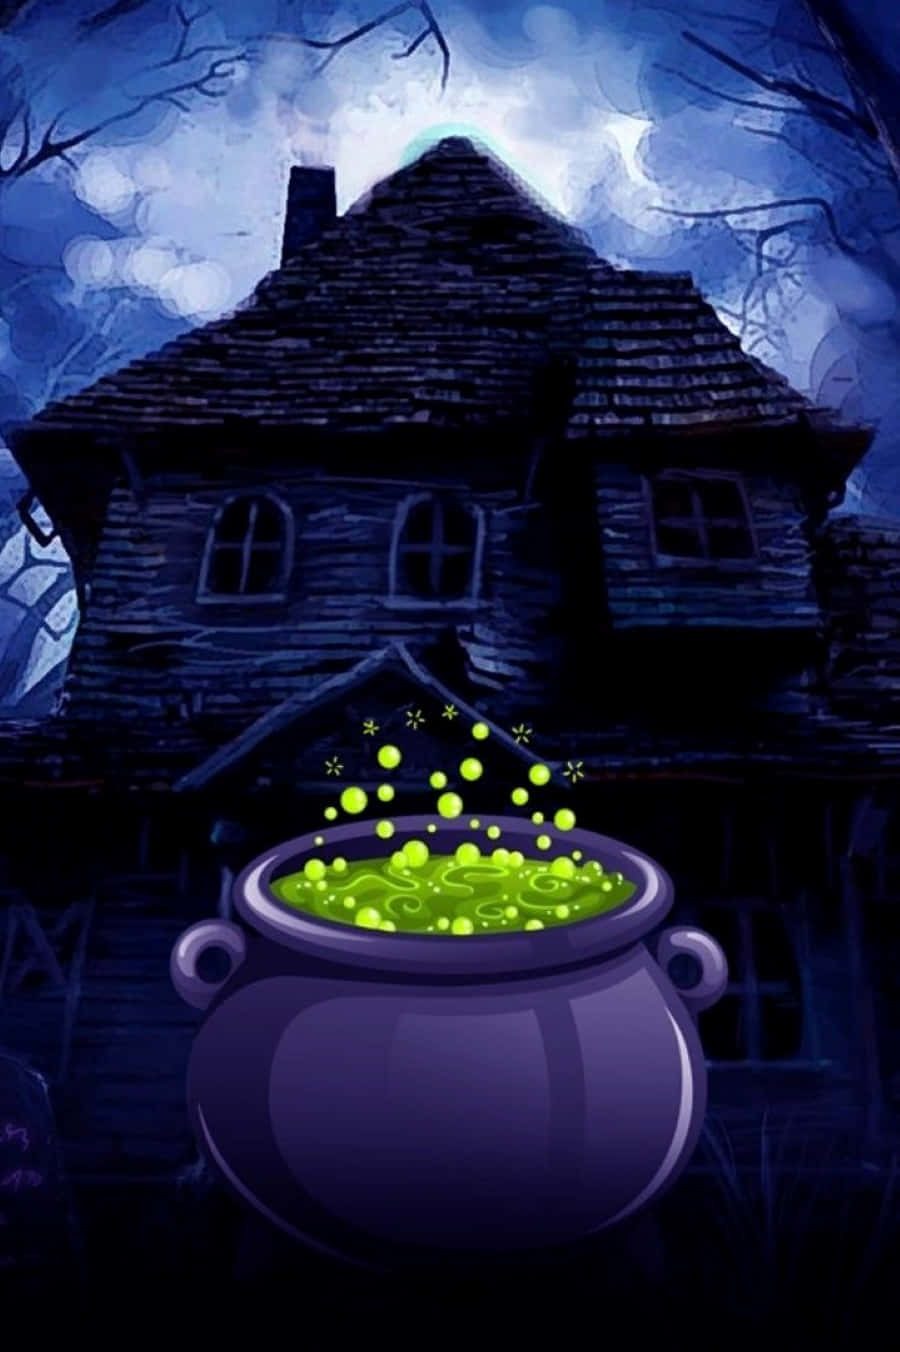 Enchanting Cauldron in a Mystical Forest Wallpaper